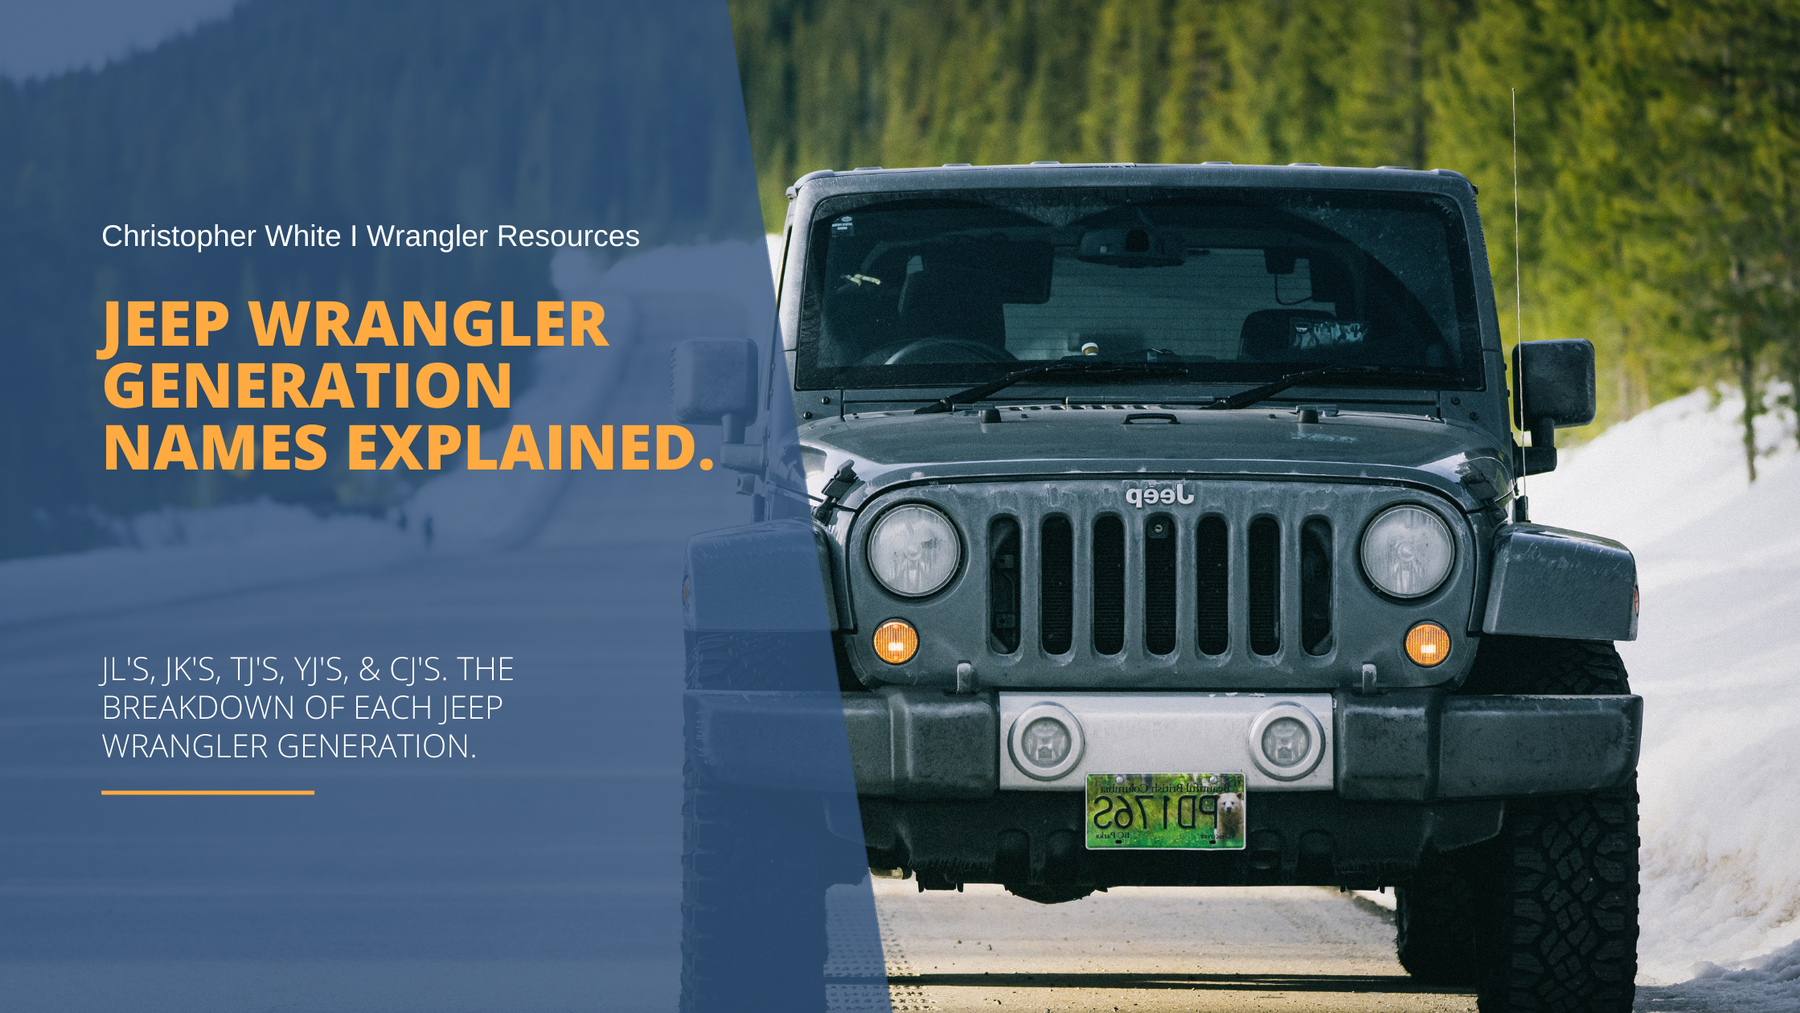 Jeep Wrangler Generation Names Explained.